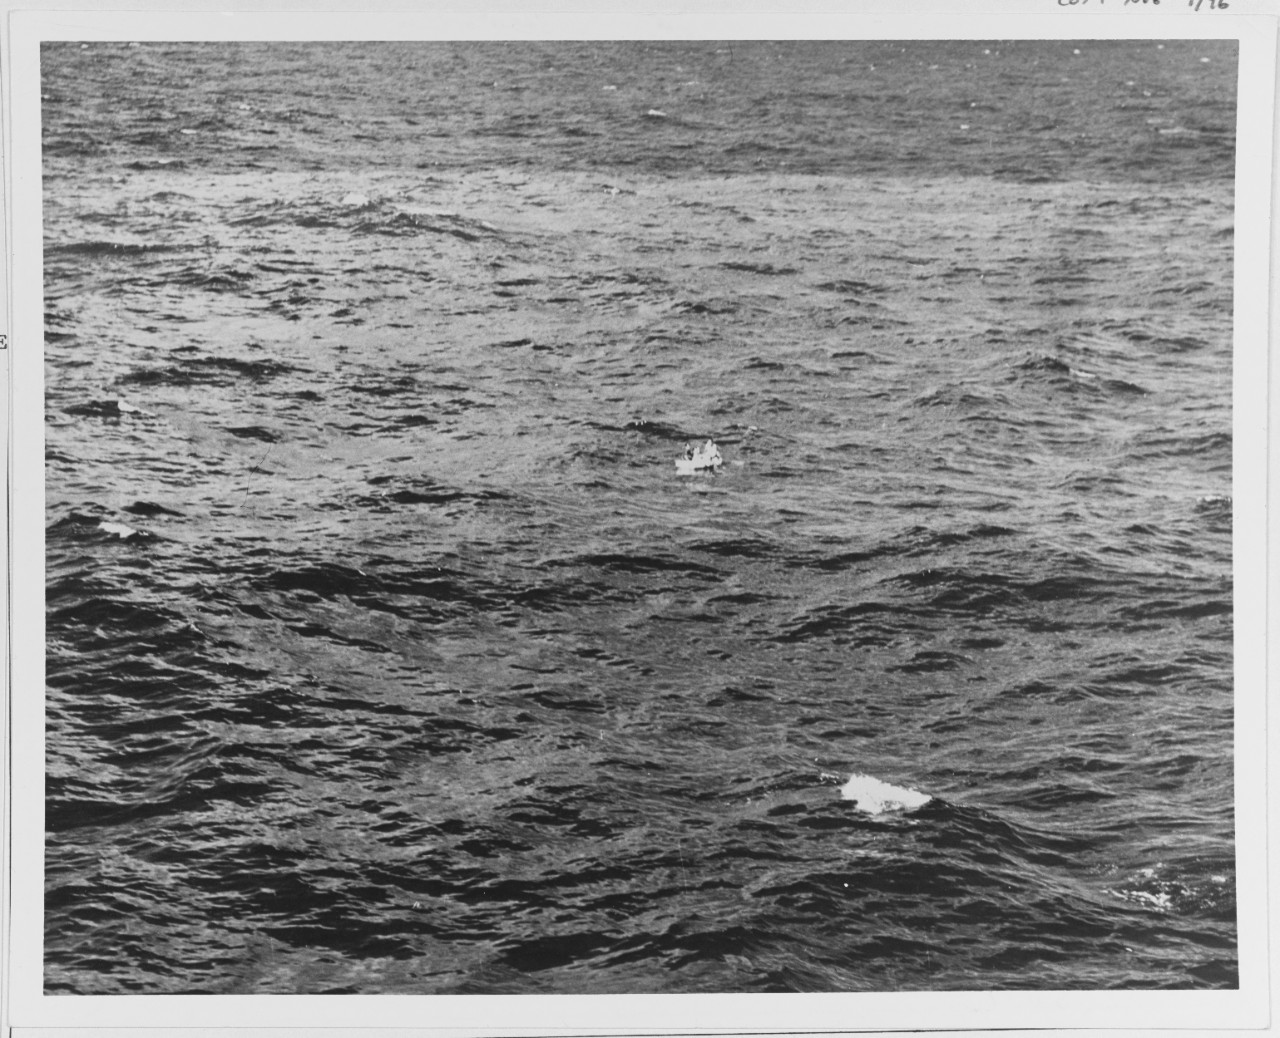 Sinking of U-156